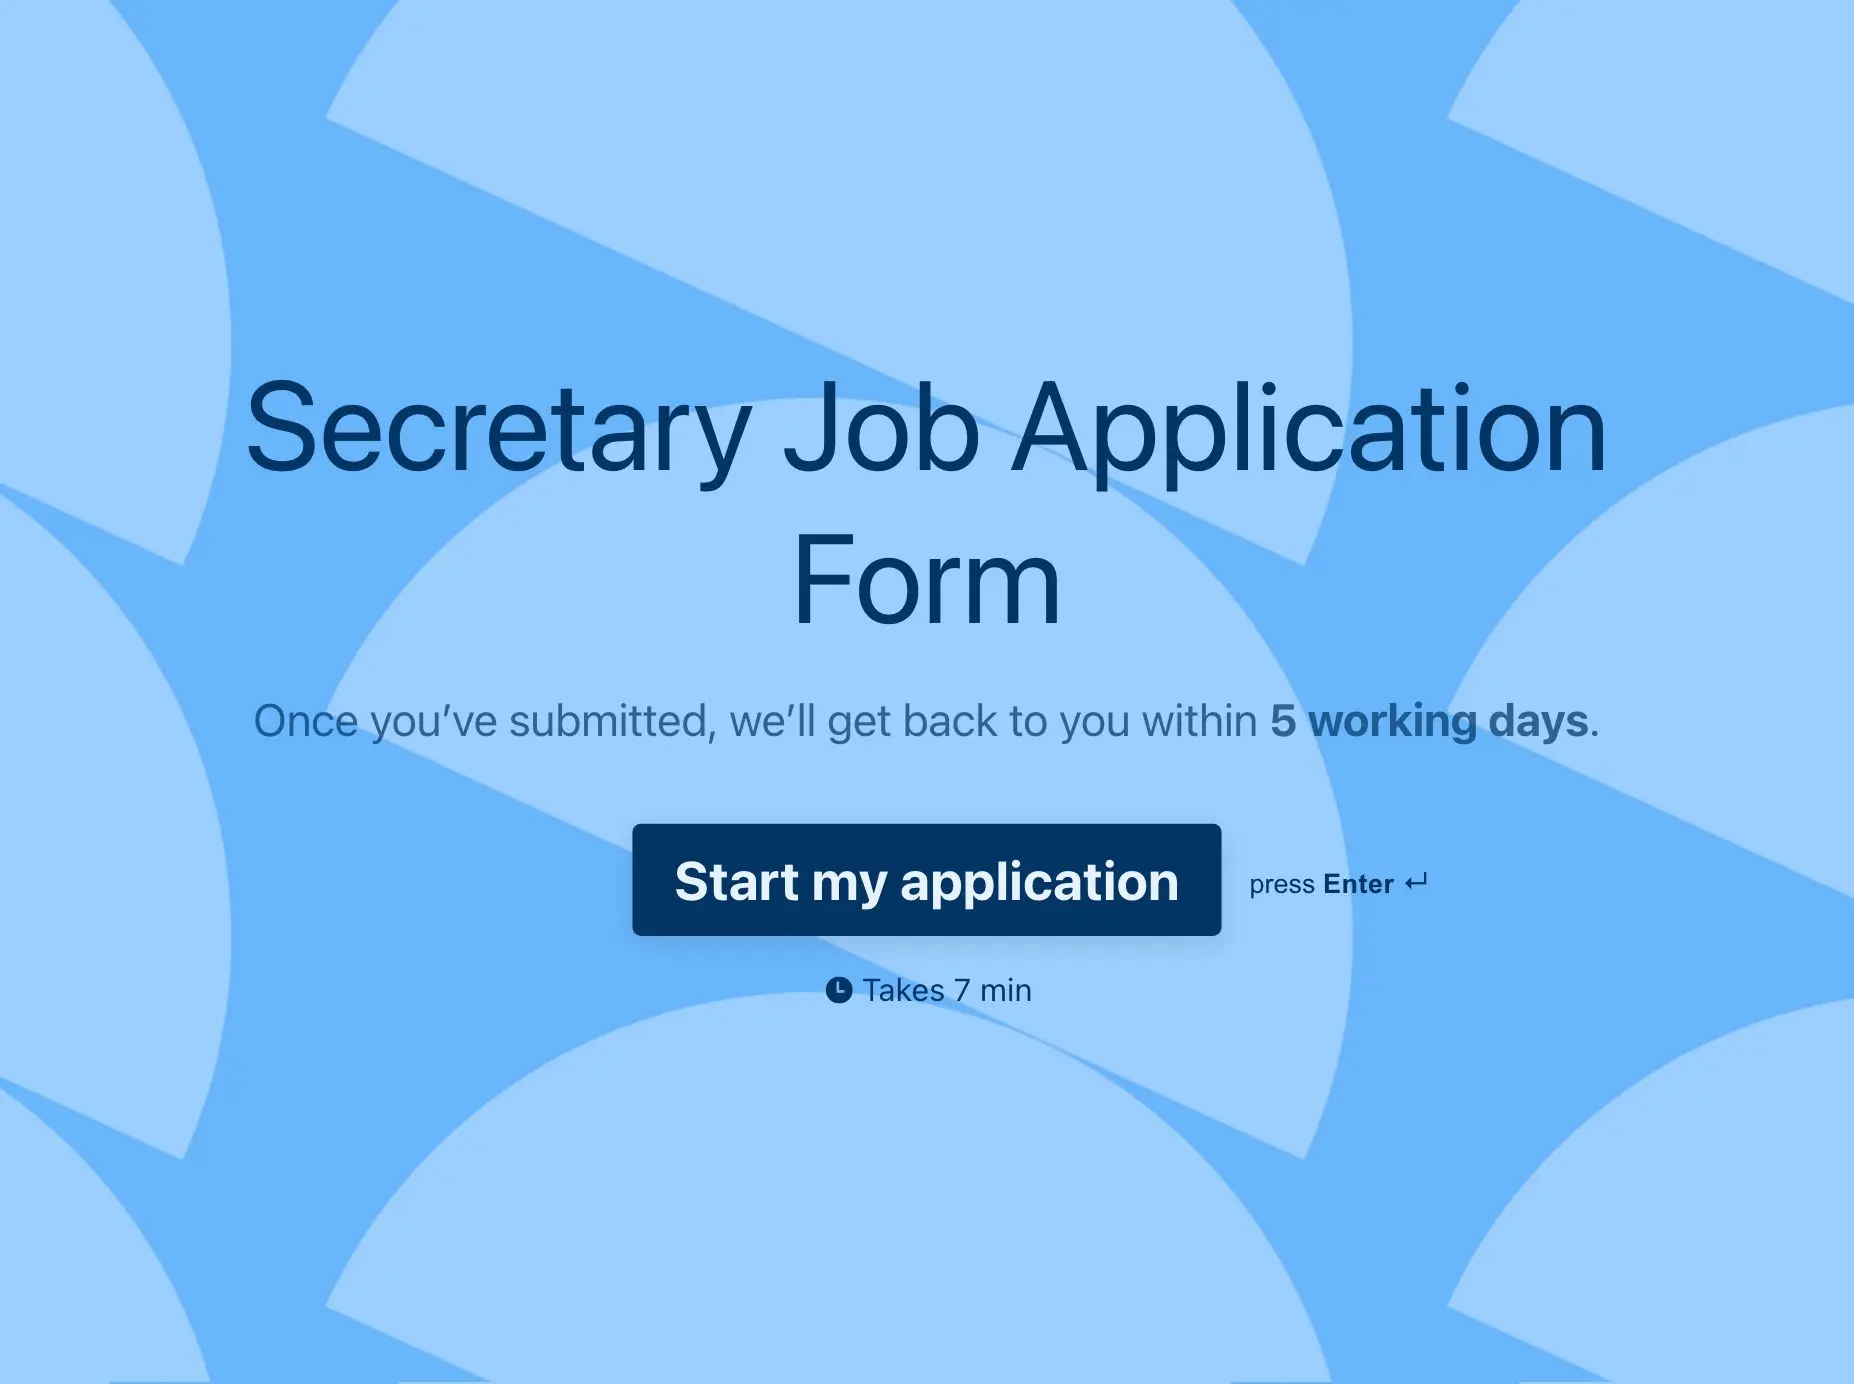 Secretary Job Application Form Template Hero